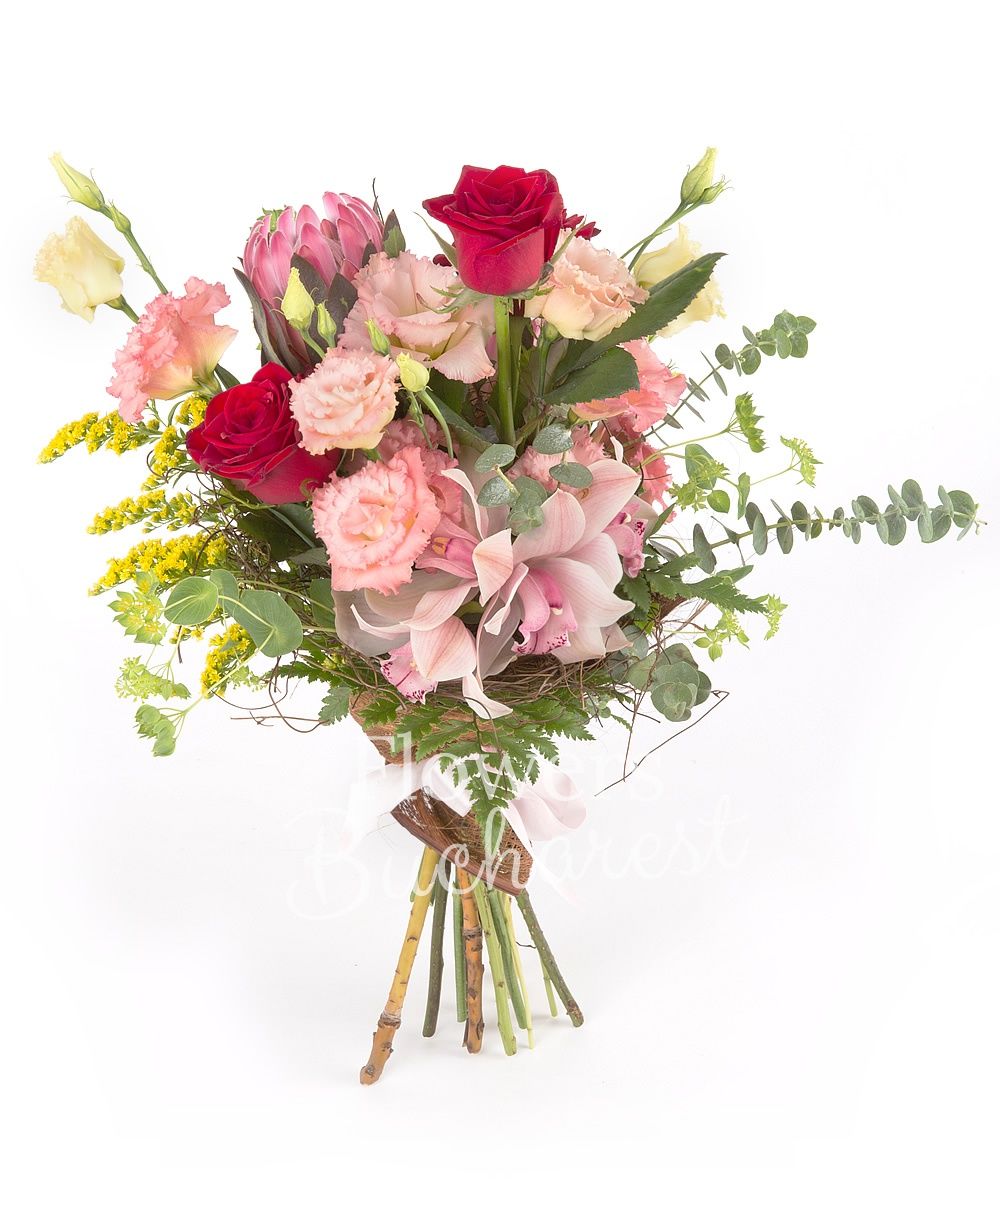 3 red roses, 2 proteea, 3 pink lisianthus, 2 solidago, pink cymbidium, 2 bupleurum, greenery